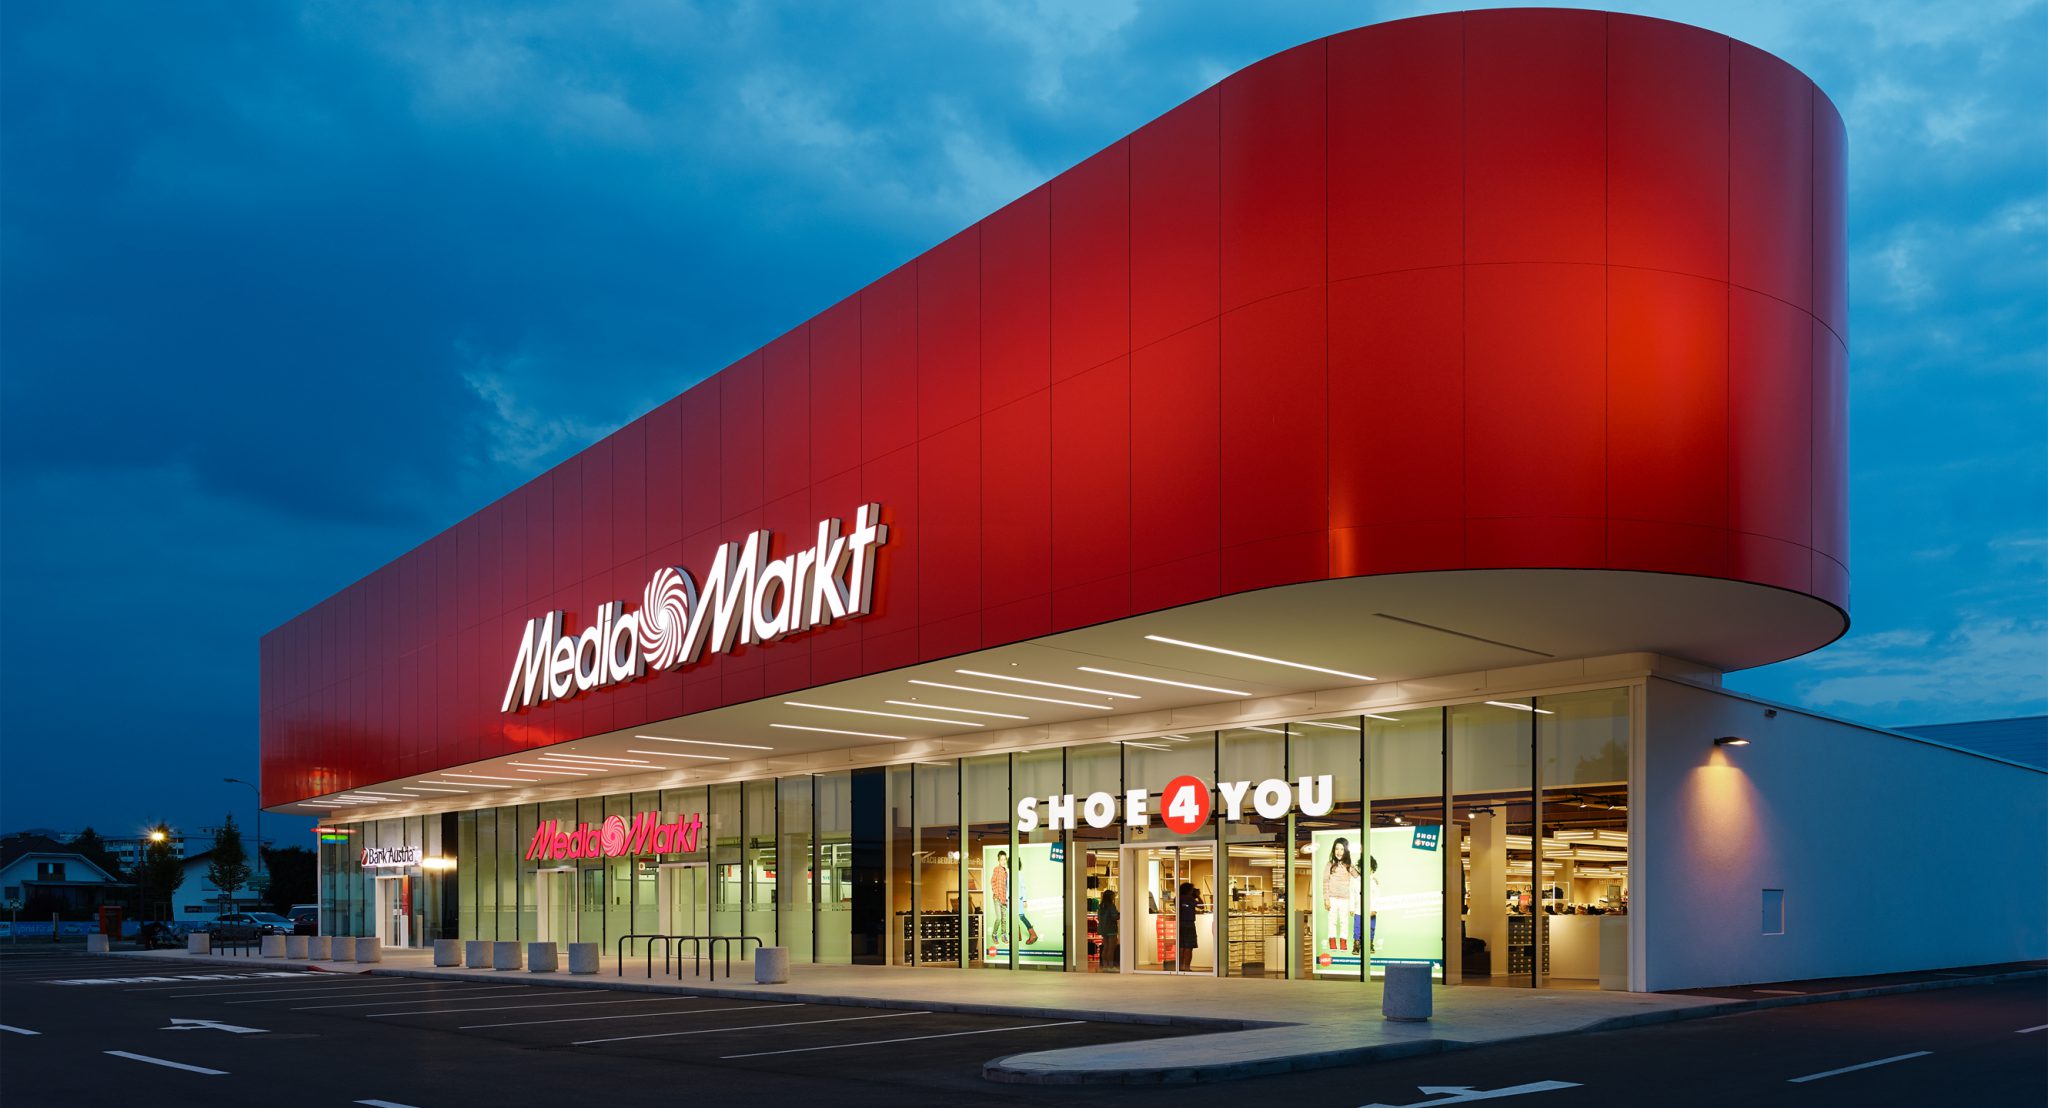 Retail Centre MEDIA MARKT: Dynamic Shopping Experience